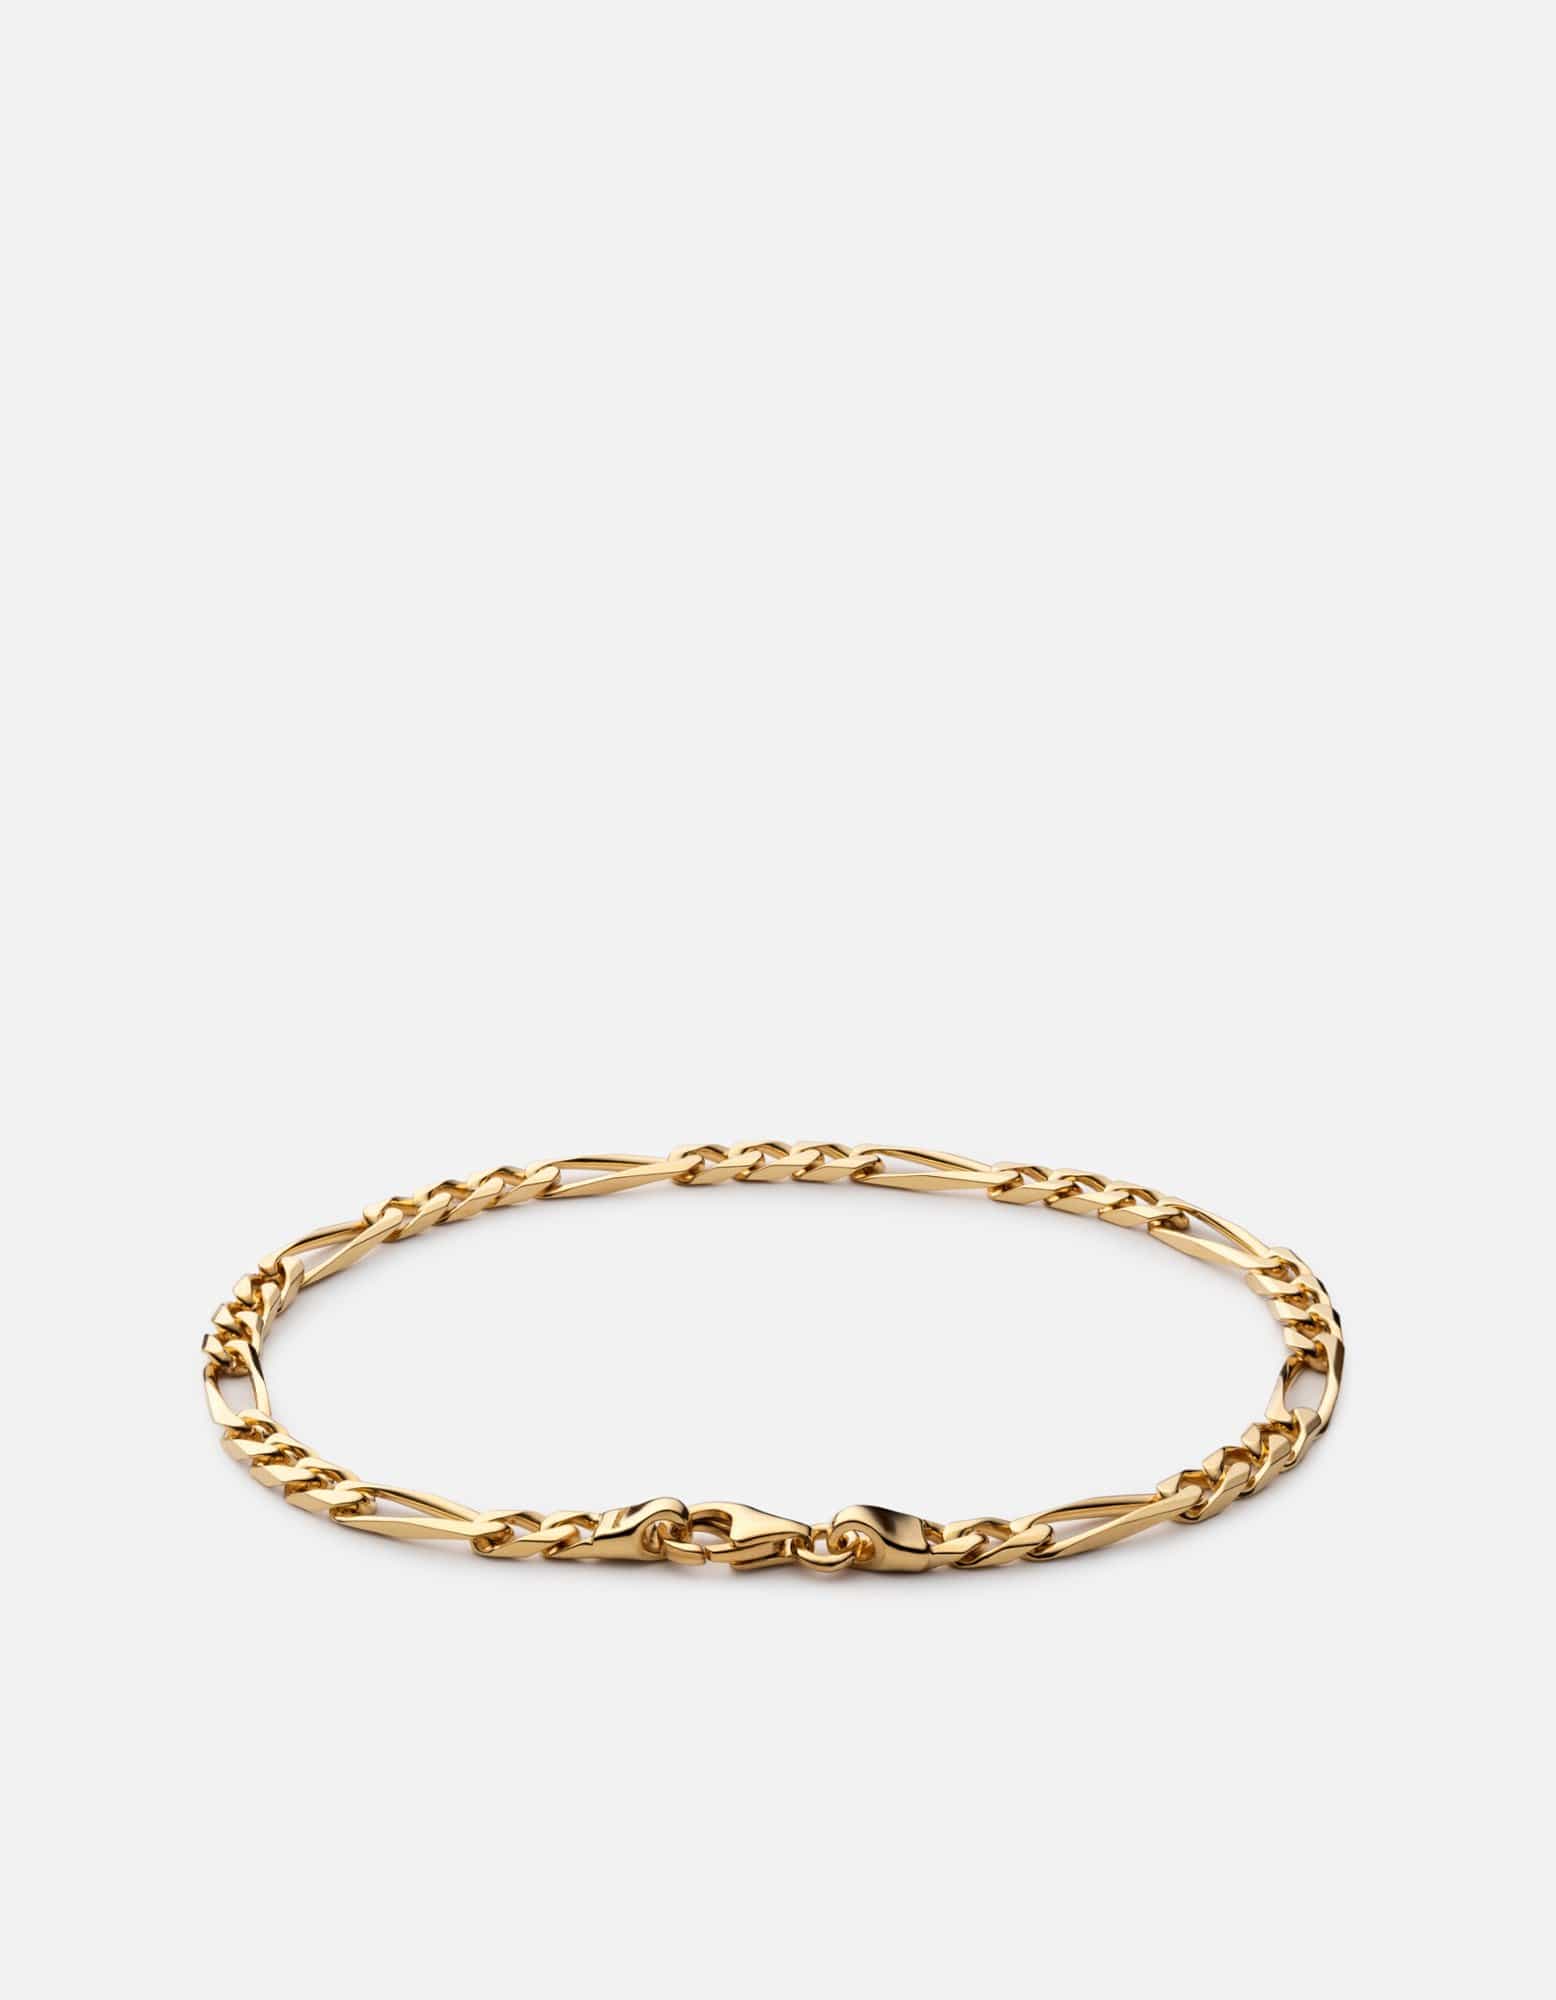 SALE 35% OFF - Large Gold Figaro Chain Bracelet